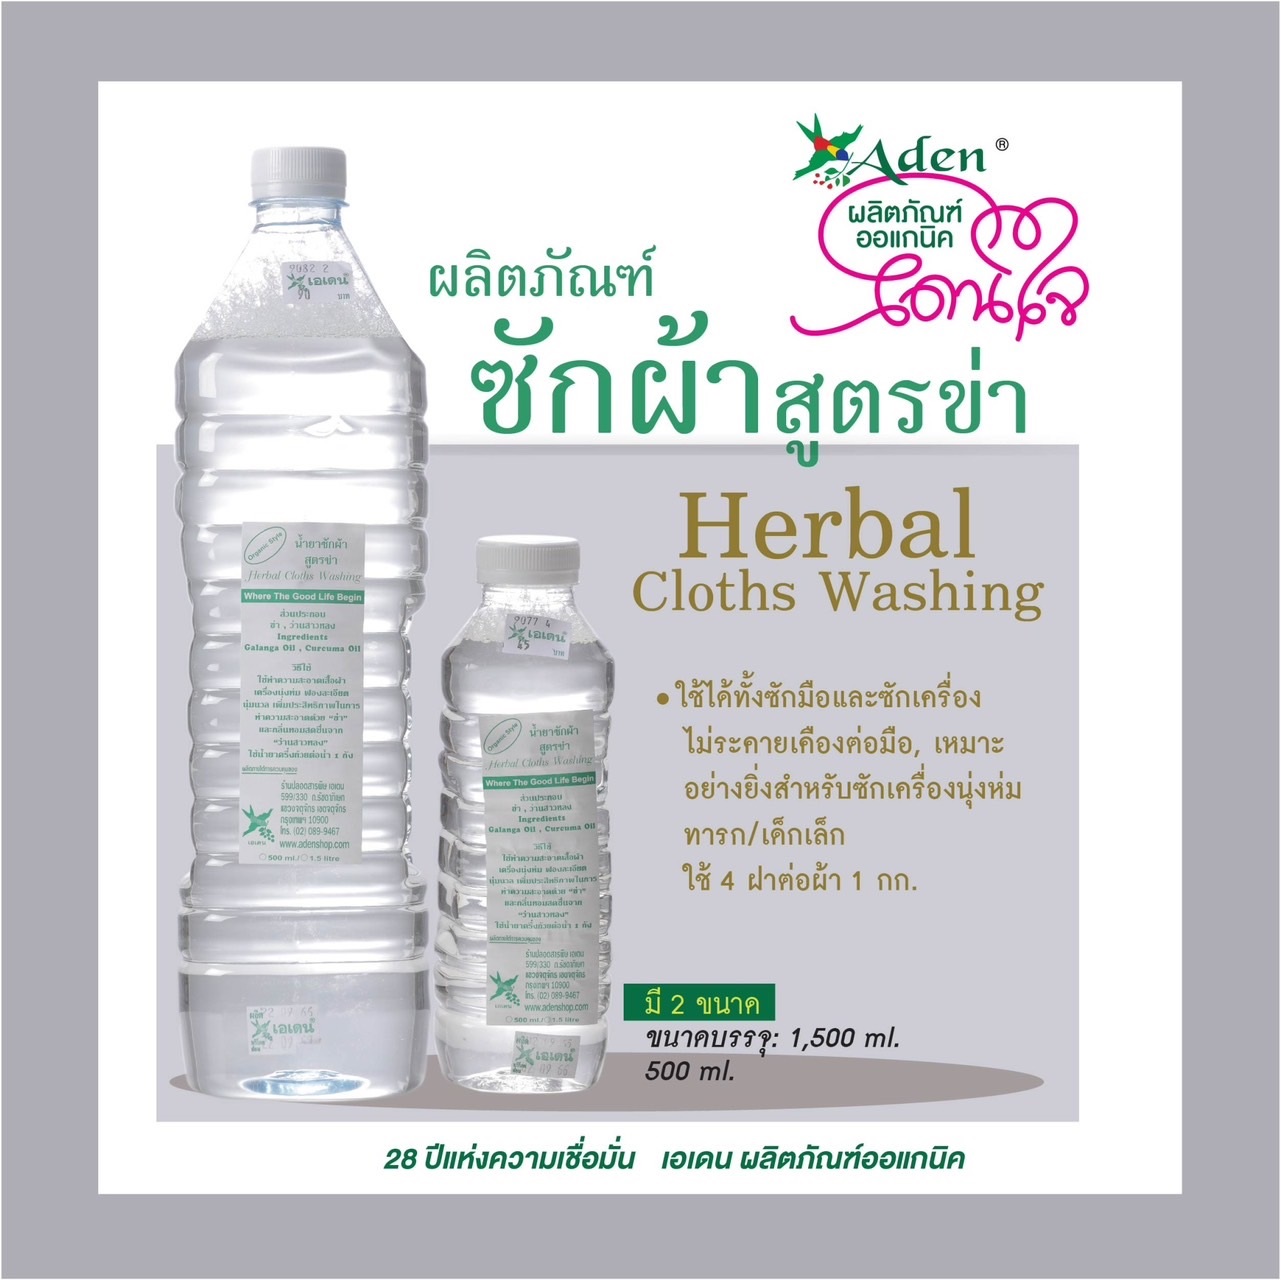 P11-0413 - : - น้ำยาซักผ้า  สูตรข่า ( Herbal cloths washing-Galanga oil formula)